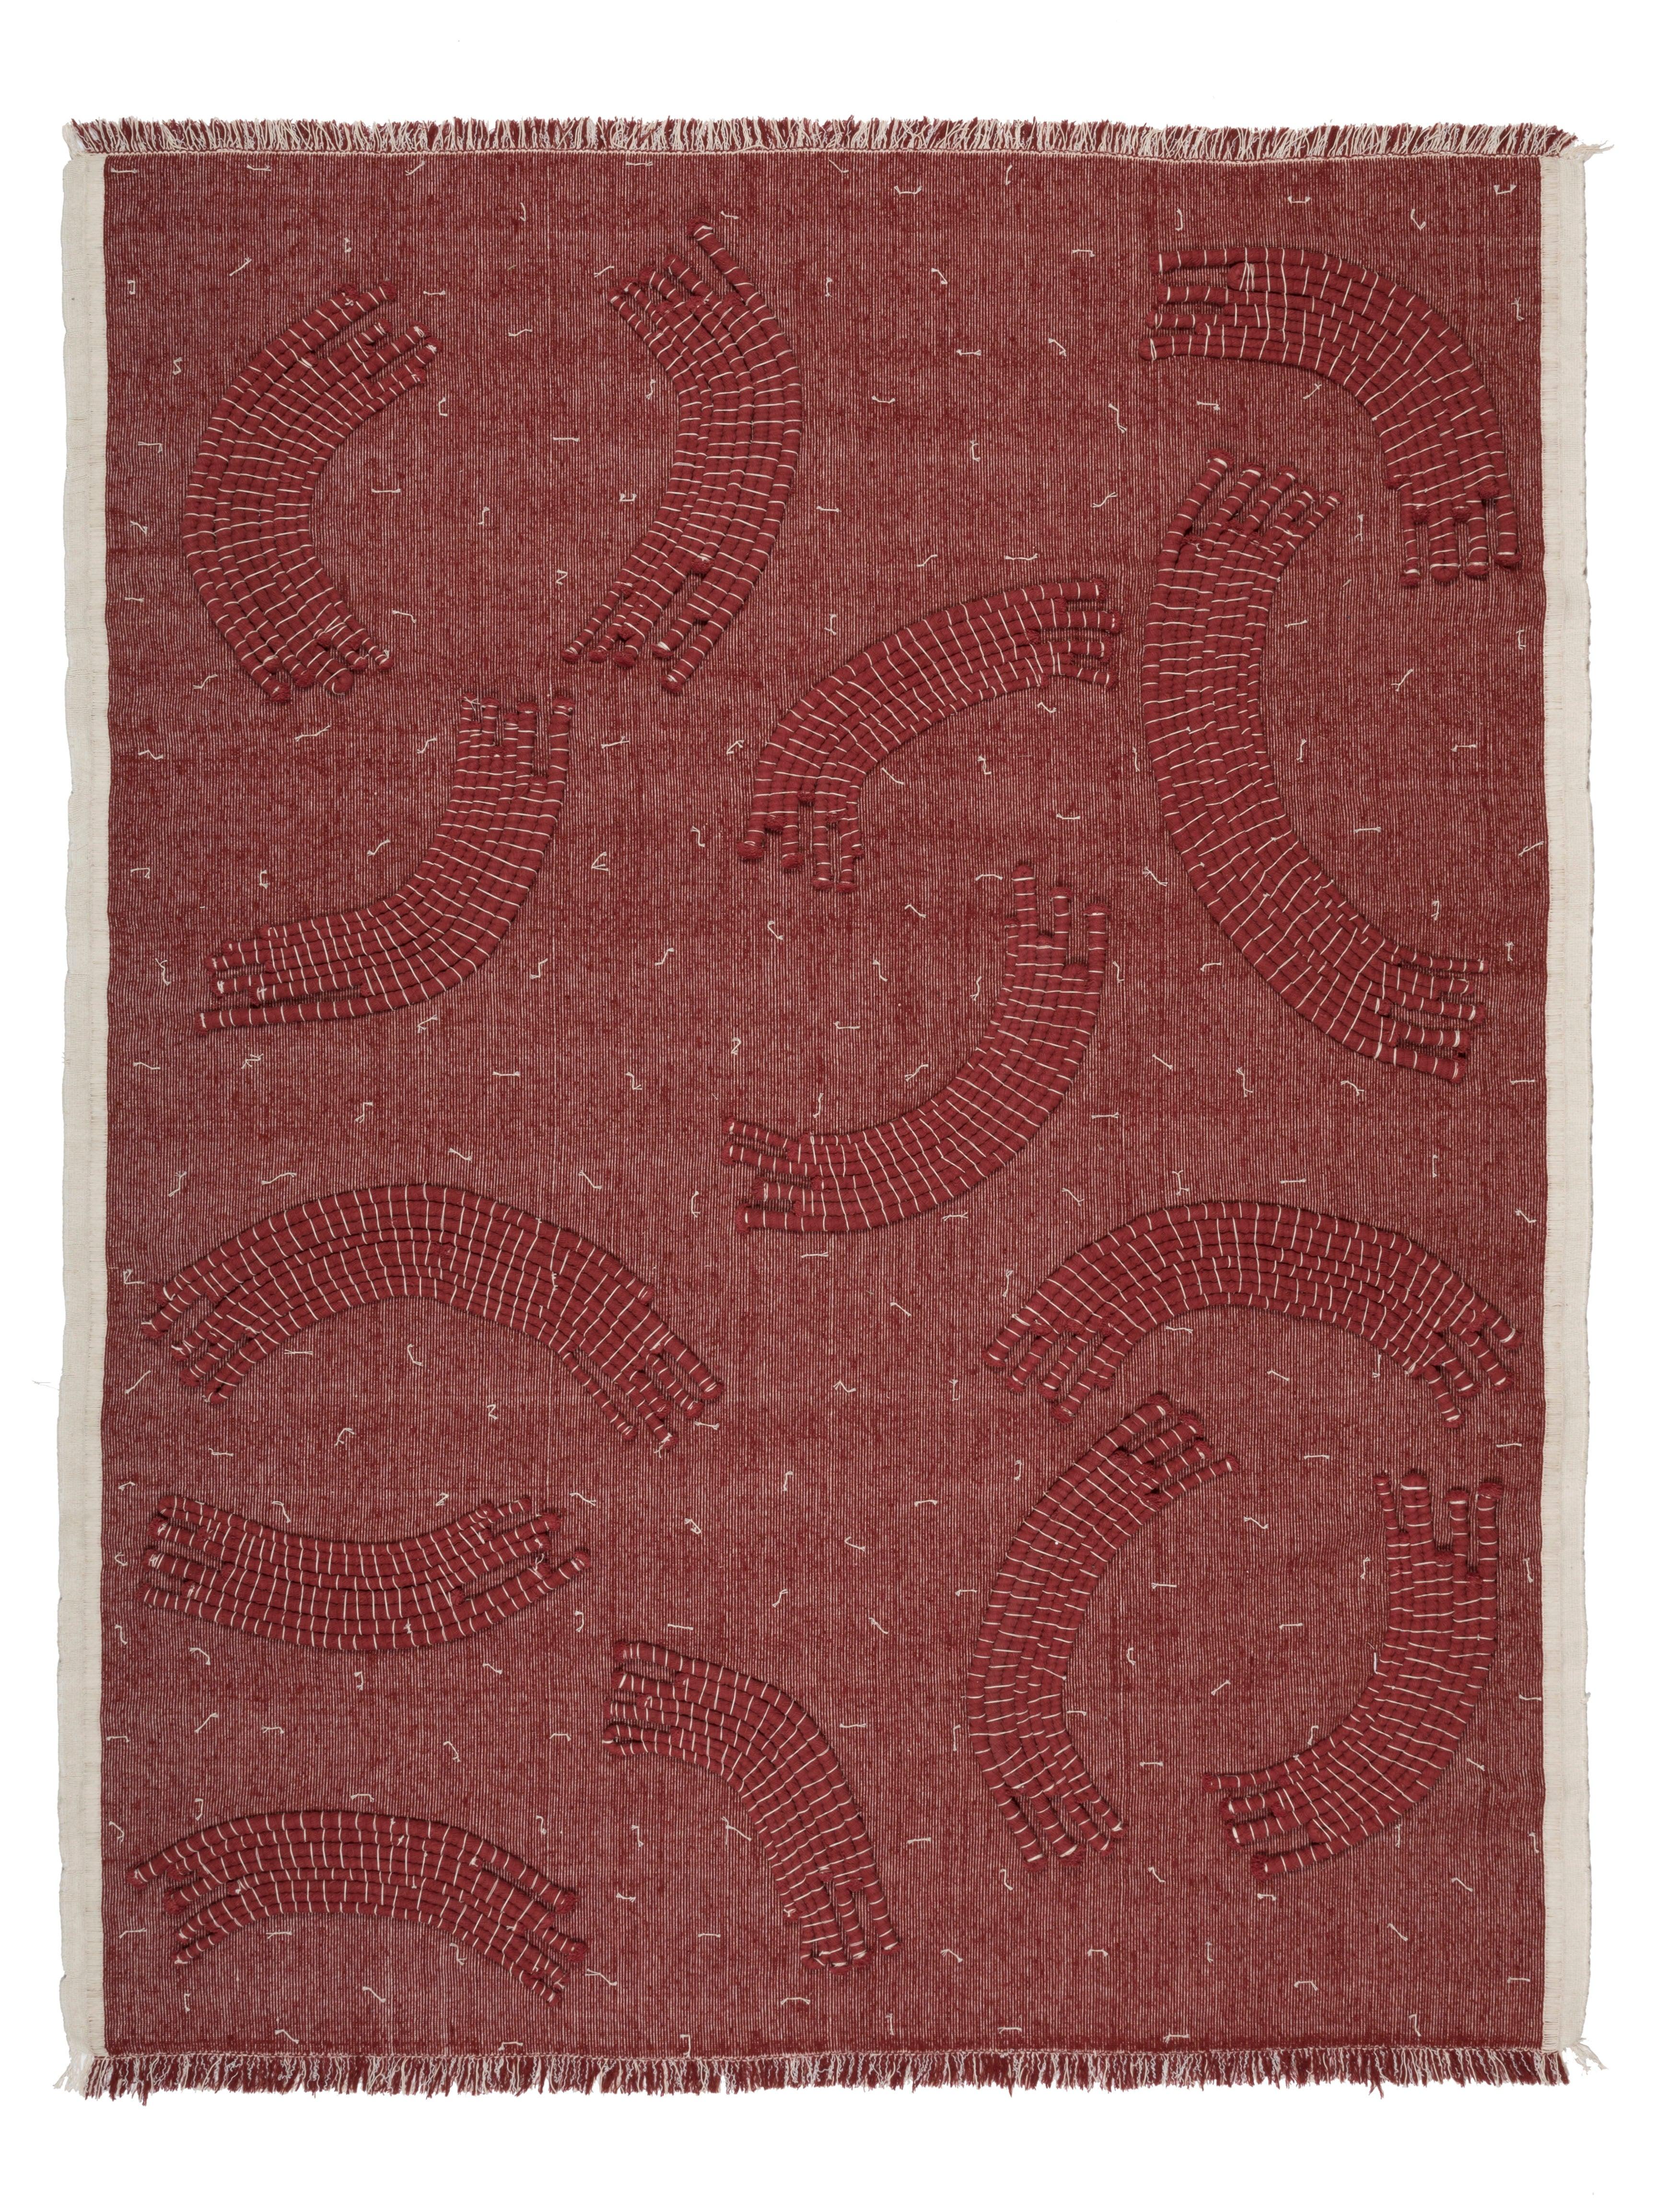 in vendita: Red cc-tapis Tappeto Quilt Inventario di Faye Toogood